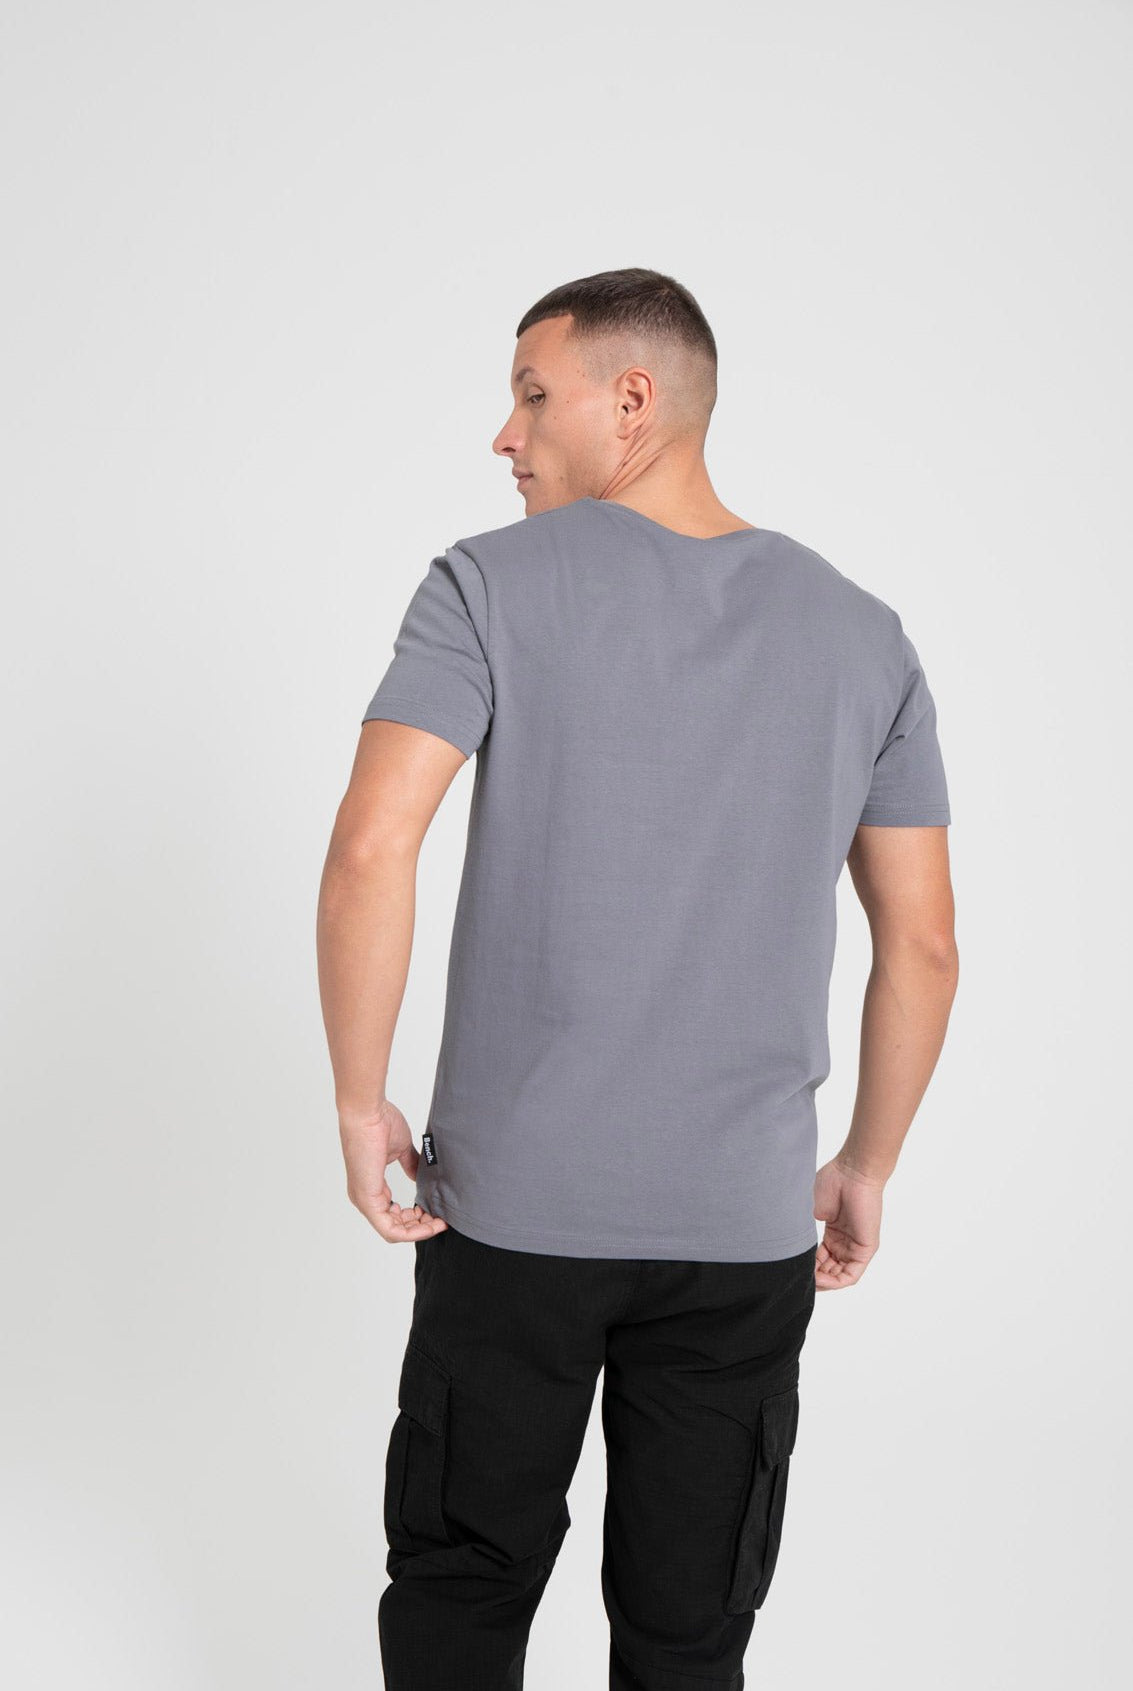 Mens 'HAWES' T-Shirt - STEEL GREY - Shop at www.Bench.co.uk #LoveMyHood